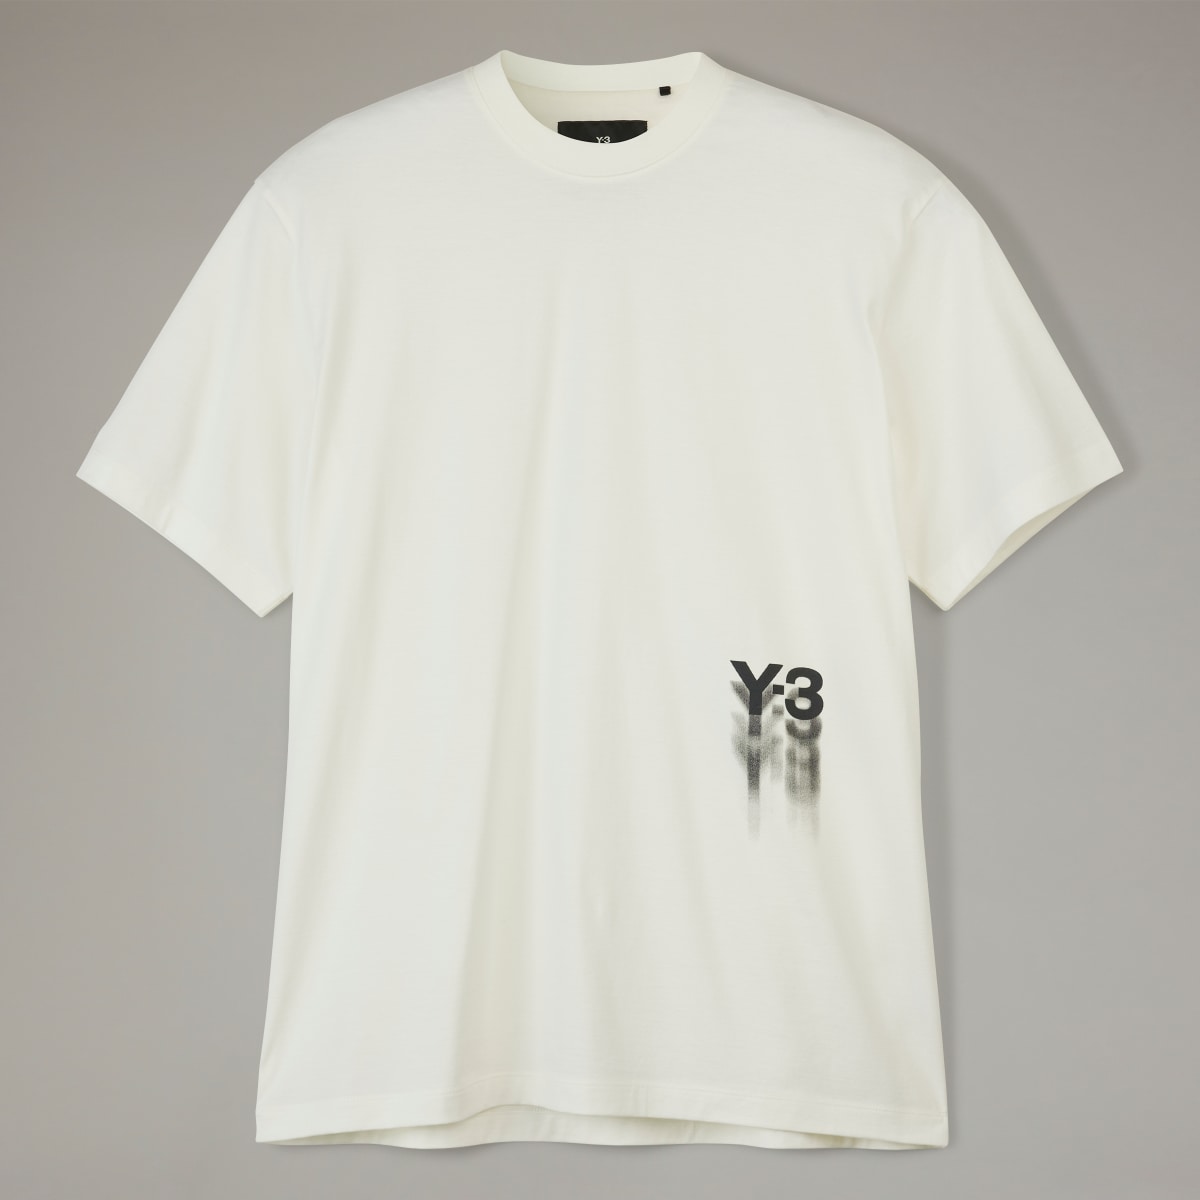 Adidas Y-3 Graphic Short Sleeve T-Shirt. 5